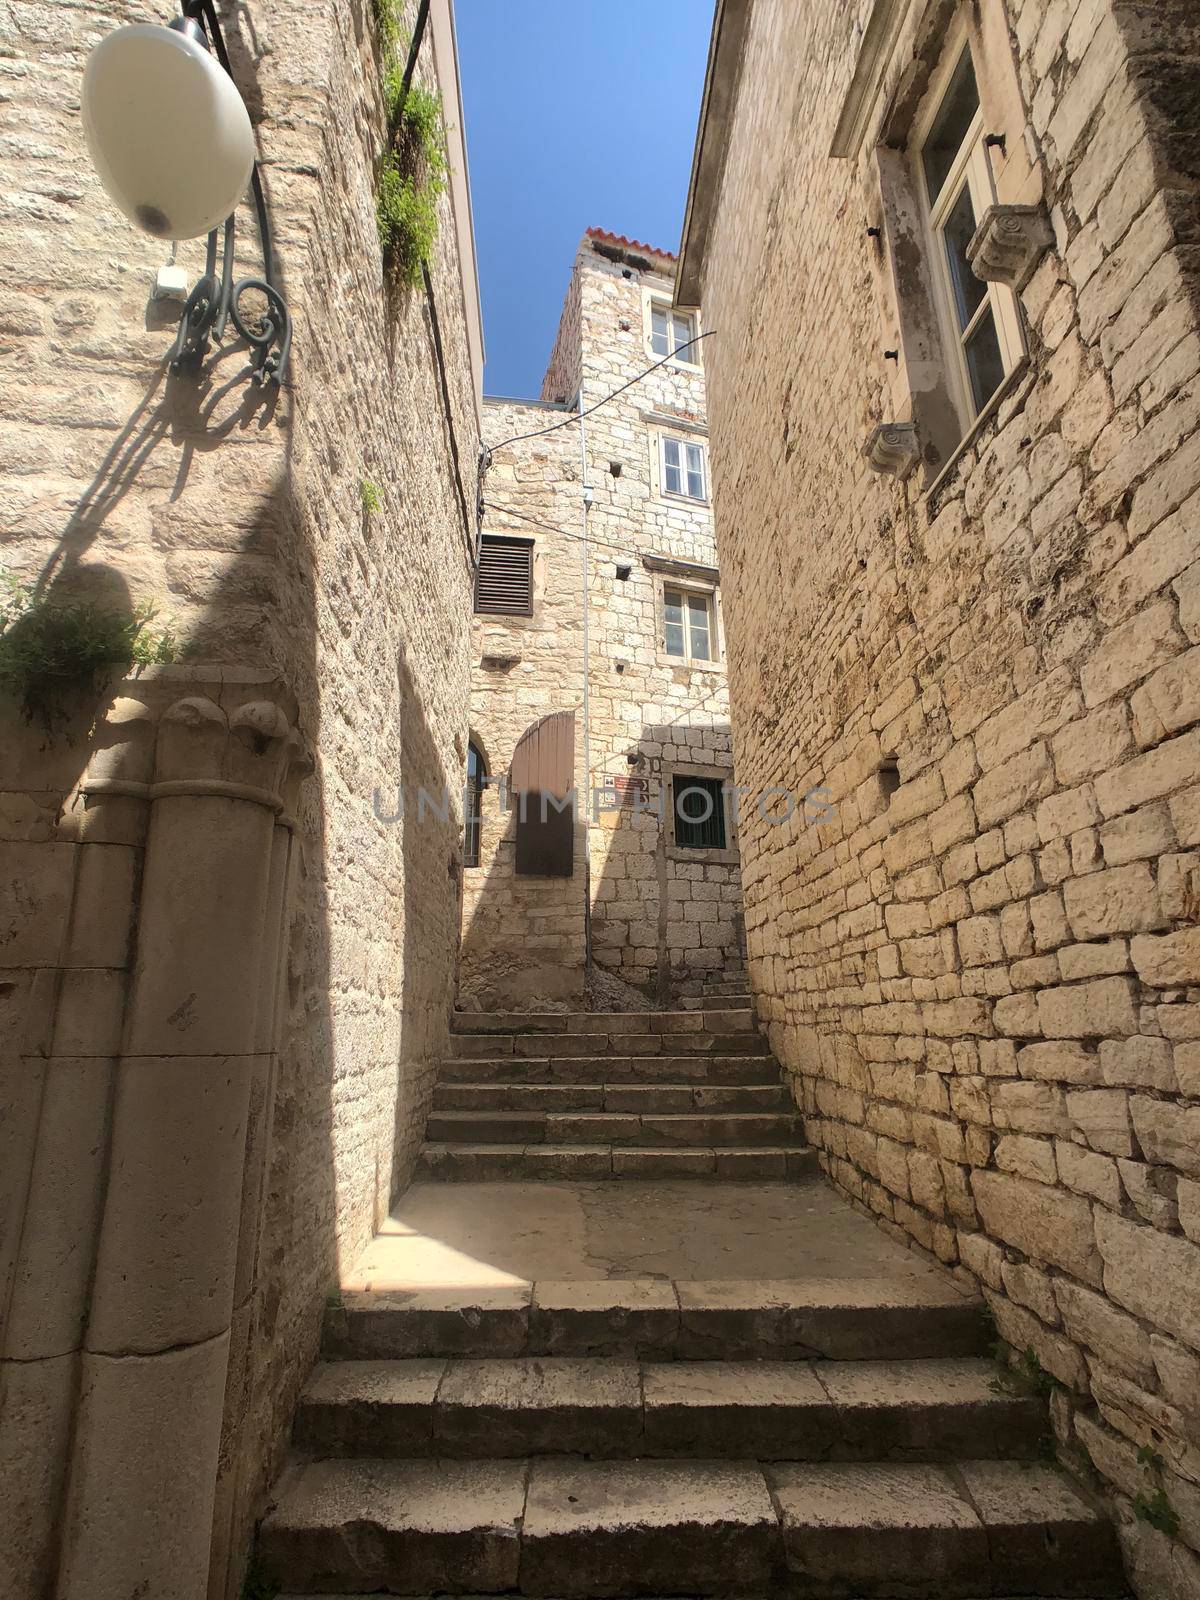 Stairs in the old town of Sibenik, Croatia